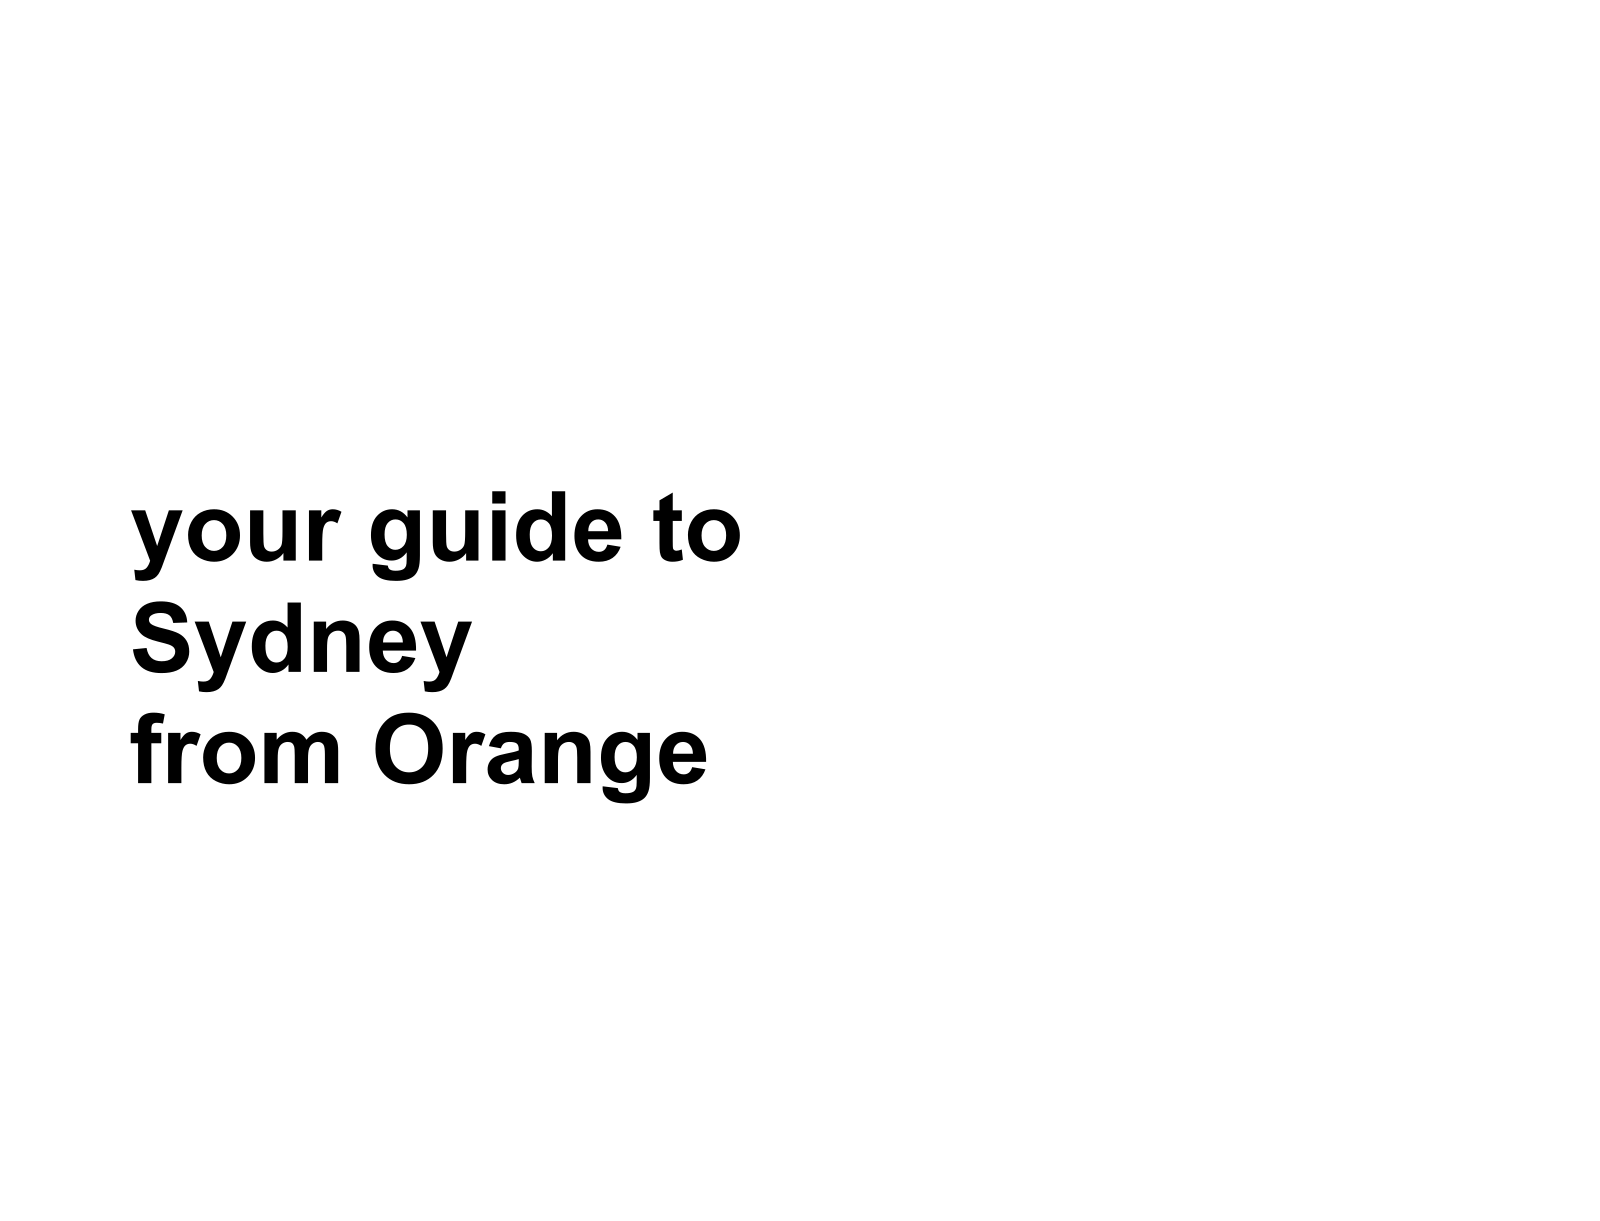 ZTE Sydney (Orange) Operating Instructions